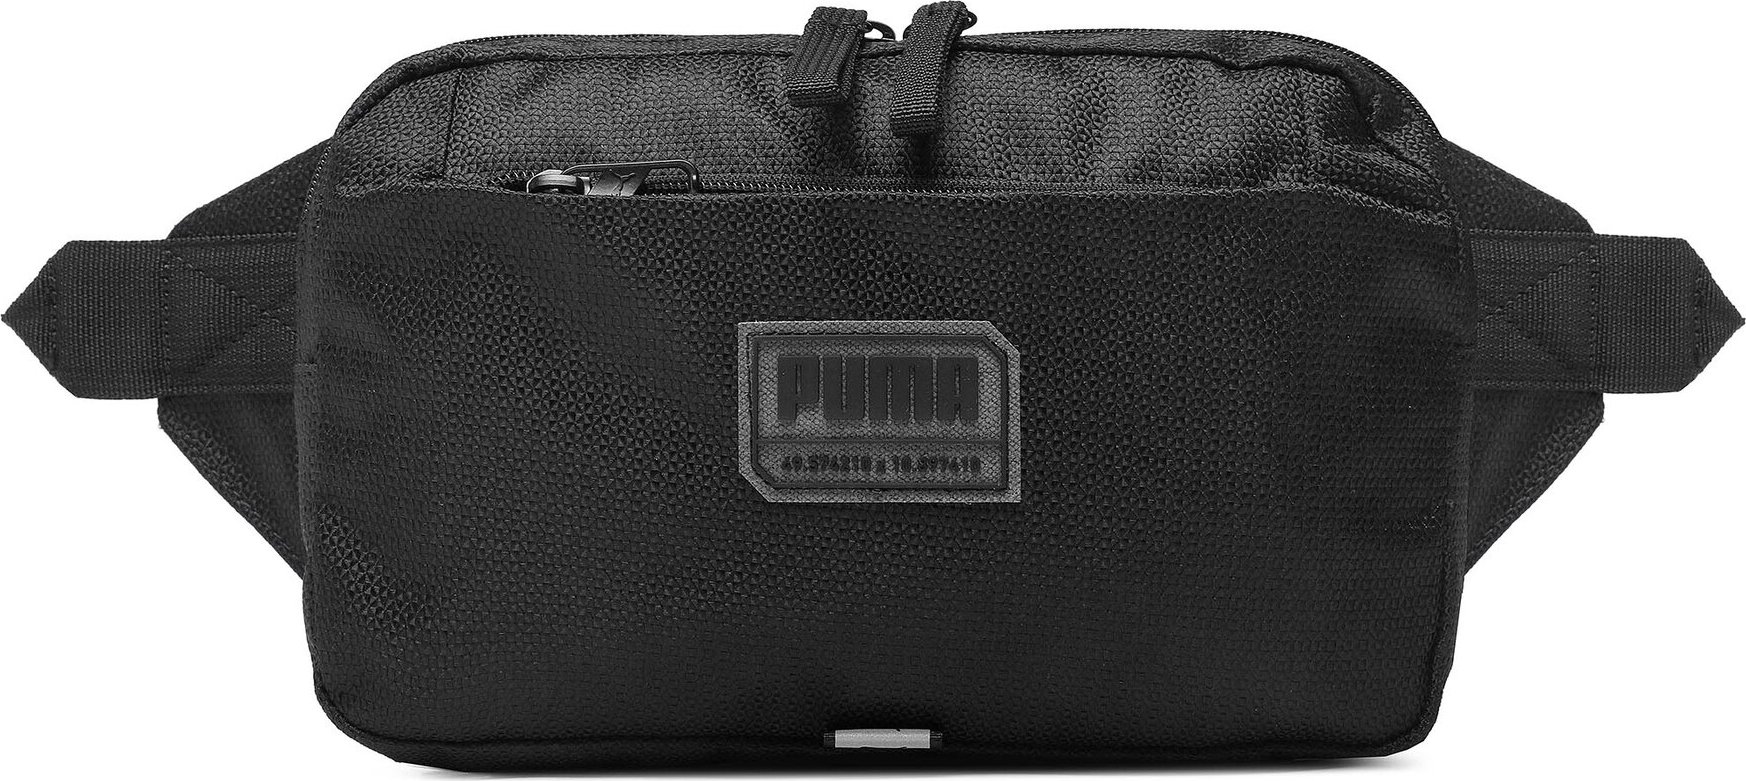 Ledvinka Puma City Crossbody Bag 079138 01 Puma Black/Two Tone Dobby